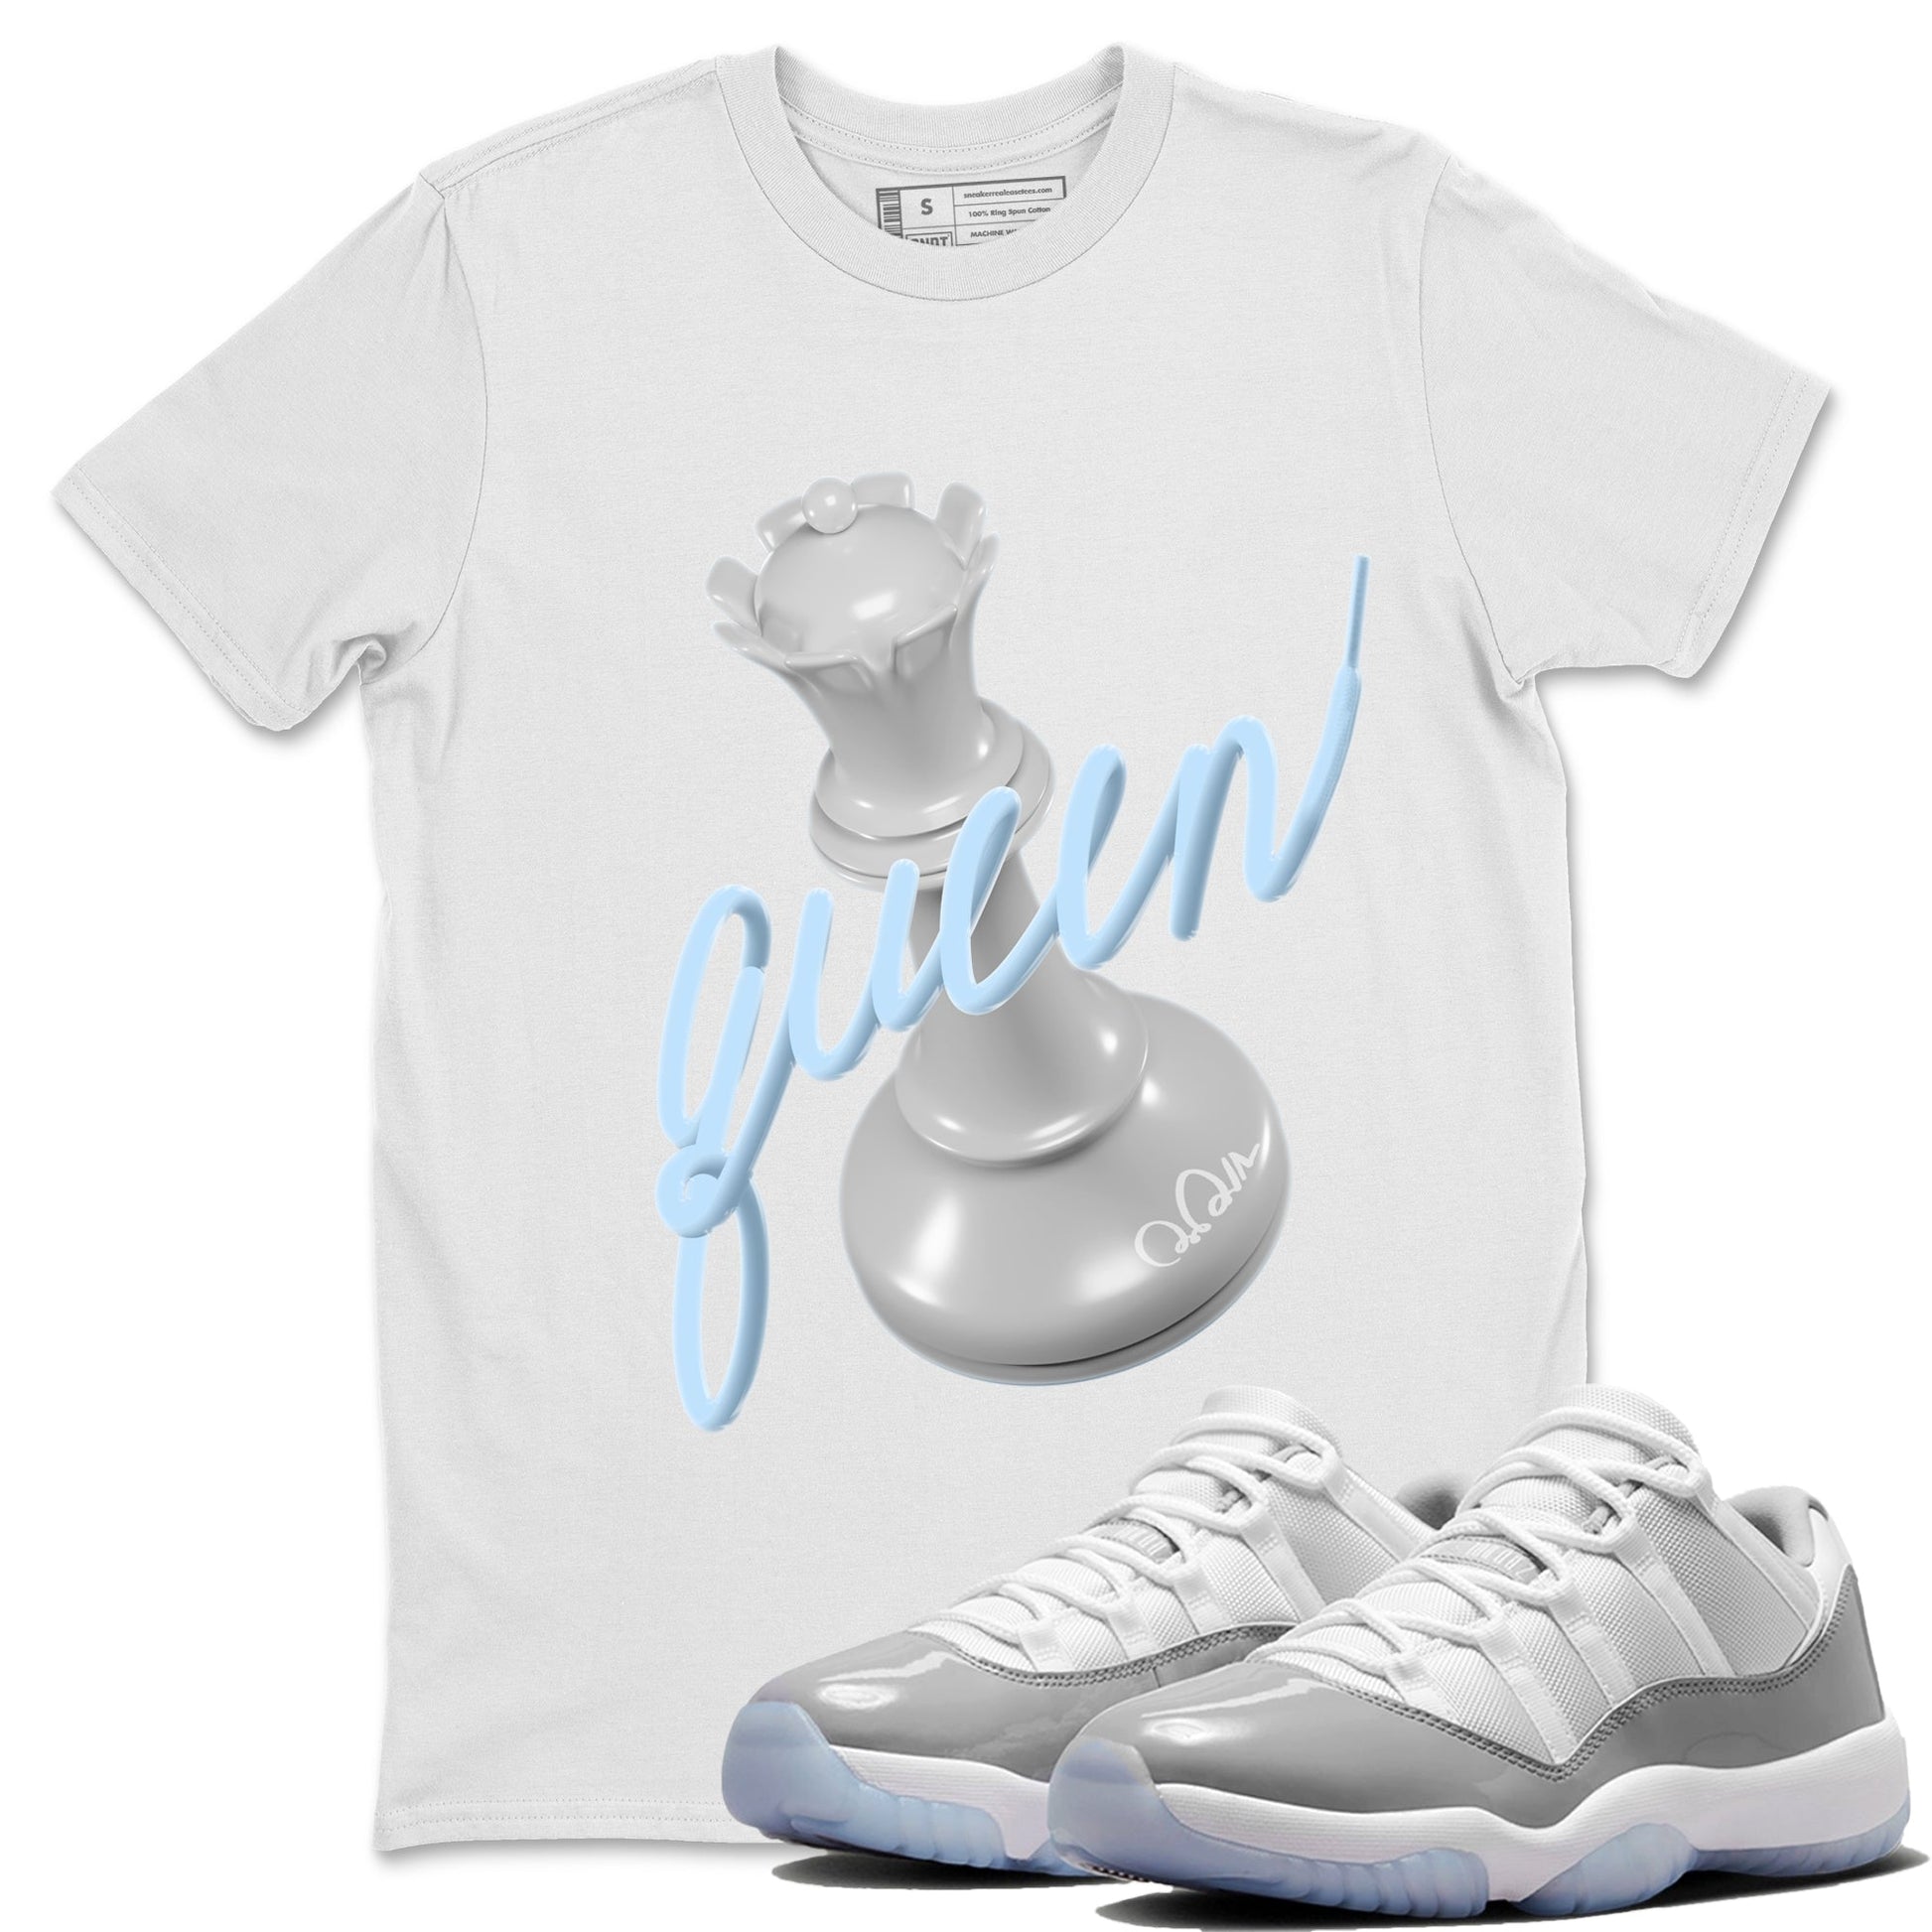 Air Jordan 11 White Cement Sneaker Match Tees 3D Queen Sneaker Tees Air Jordan 11 Cement Grey Sneaker Release Tees Unisex Shirts White 1